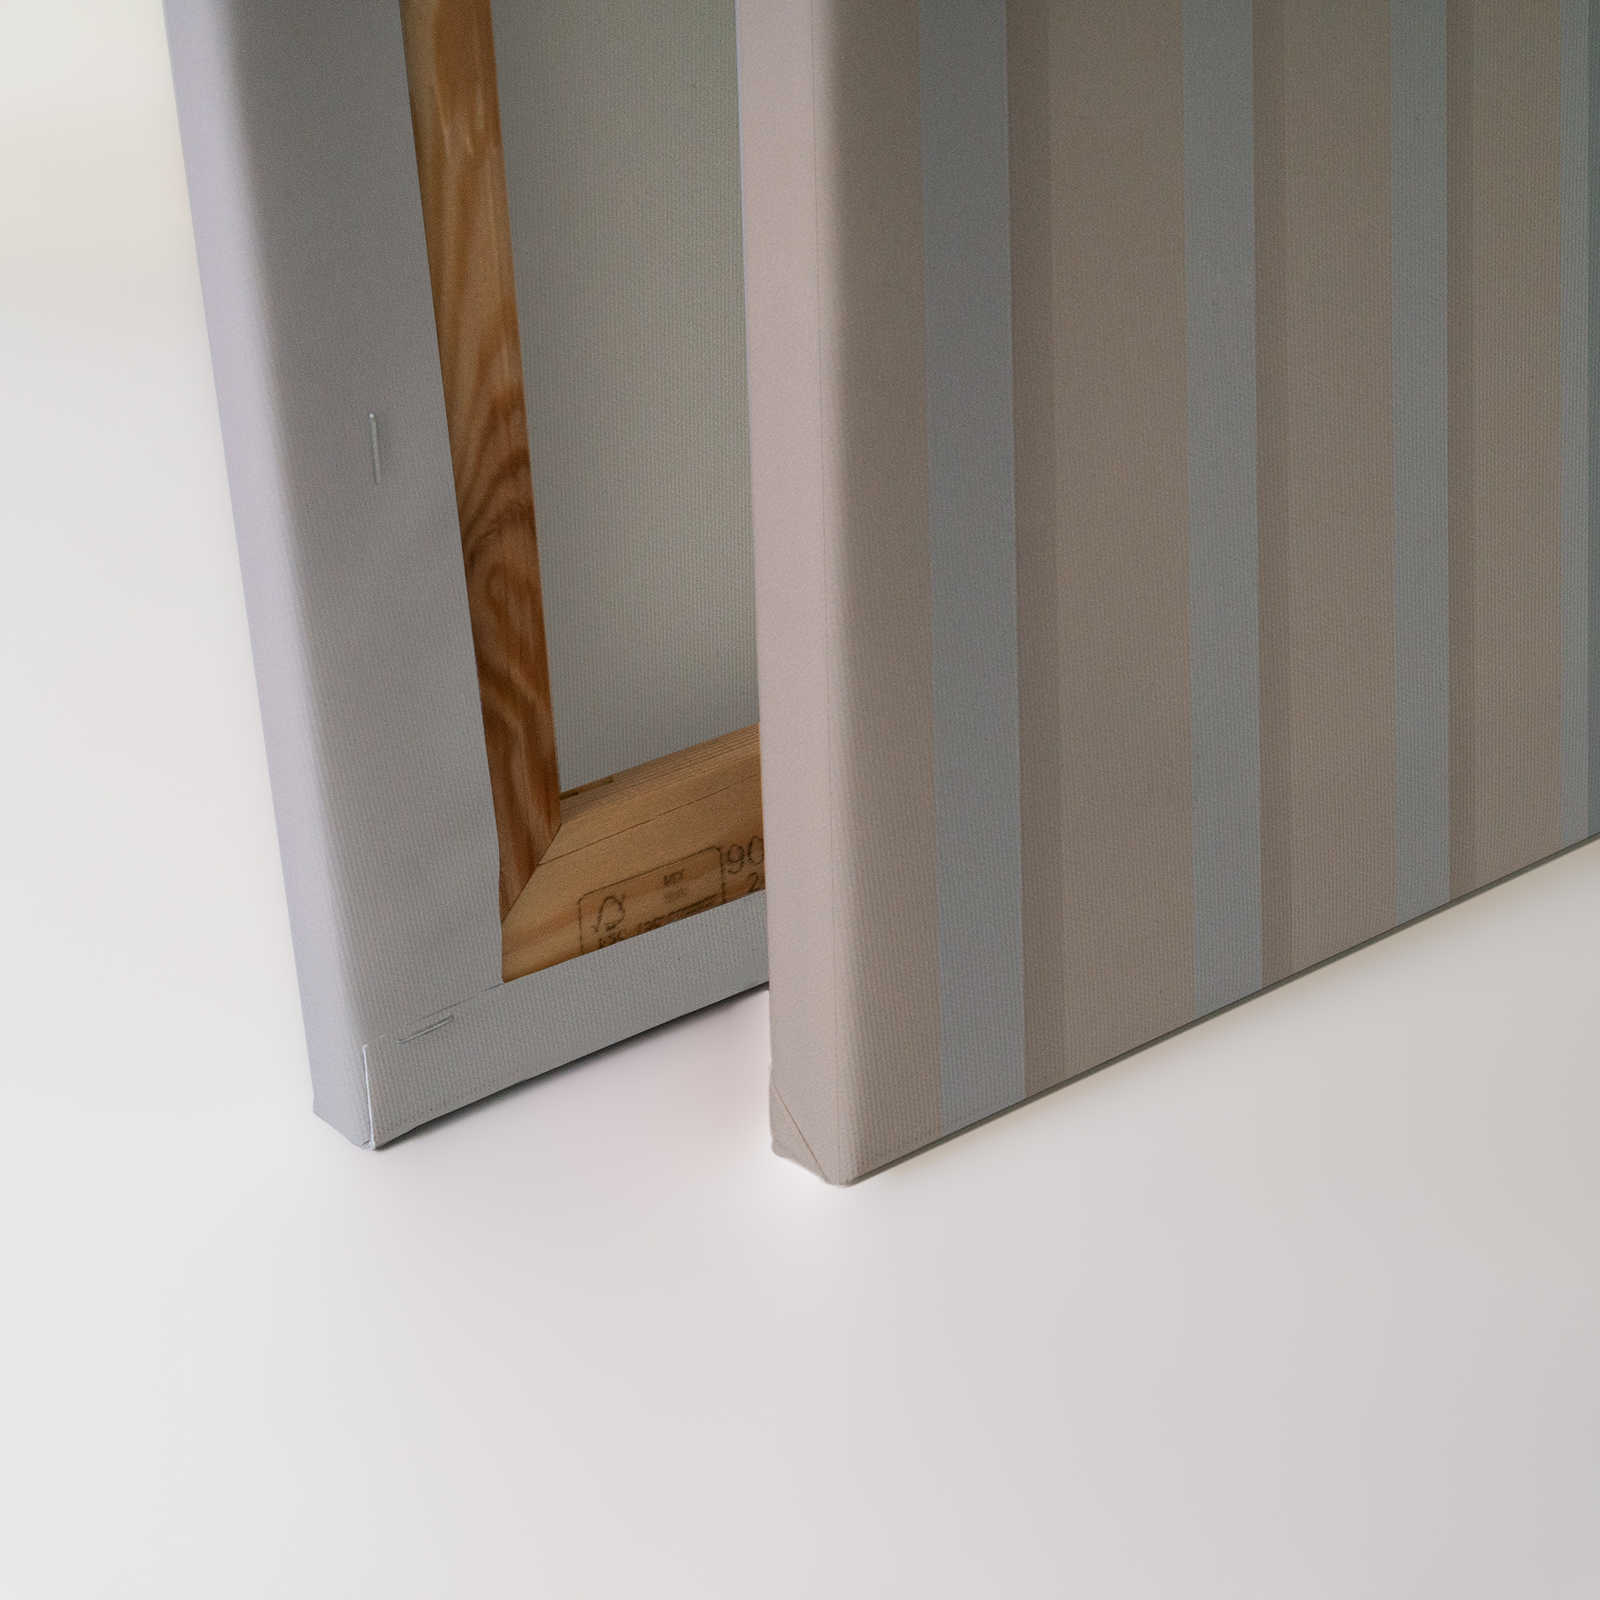             Illusion Room 2 - Leinwandbild 3D Streifen Design in Blau & Grau – 1,20 m x 0,80 m
        